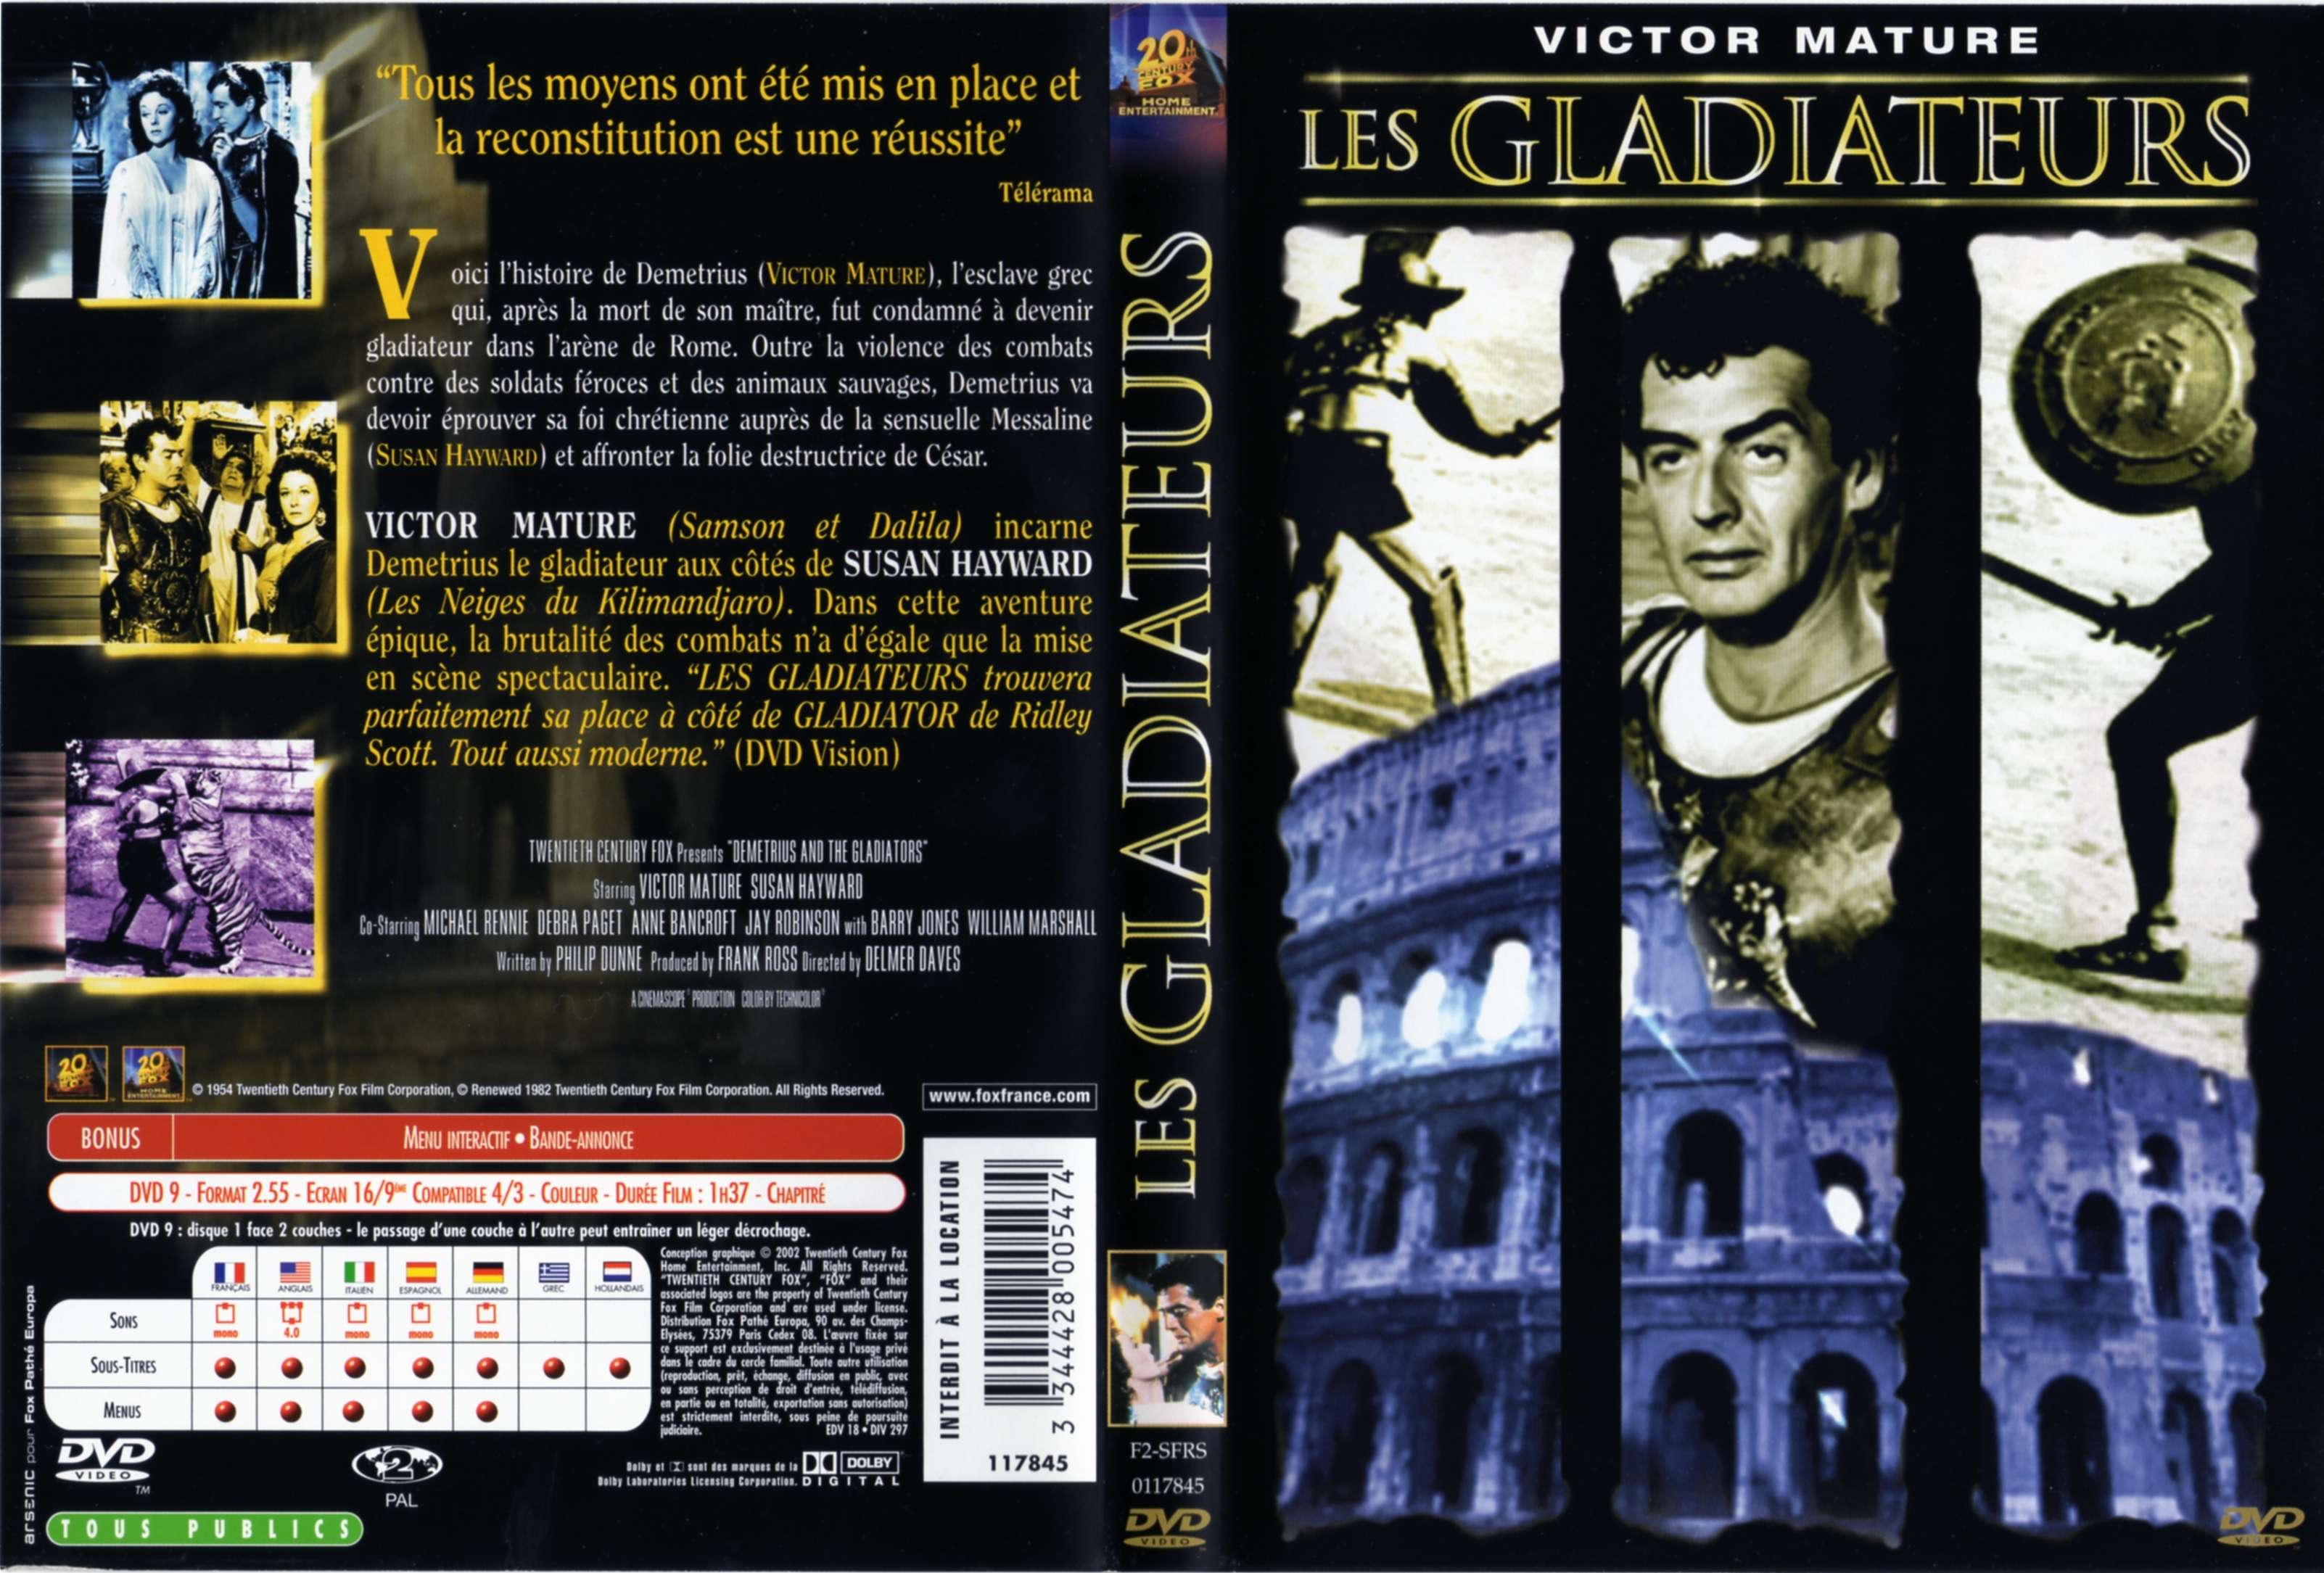 Jaquette DVD Les gladiateurs v2